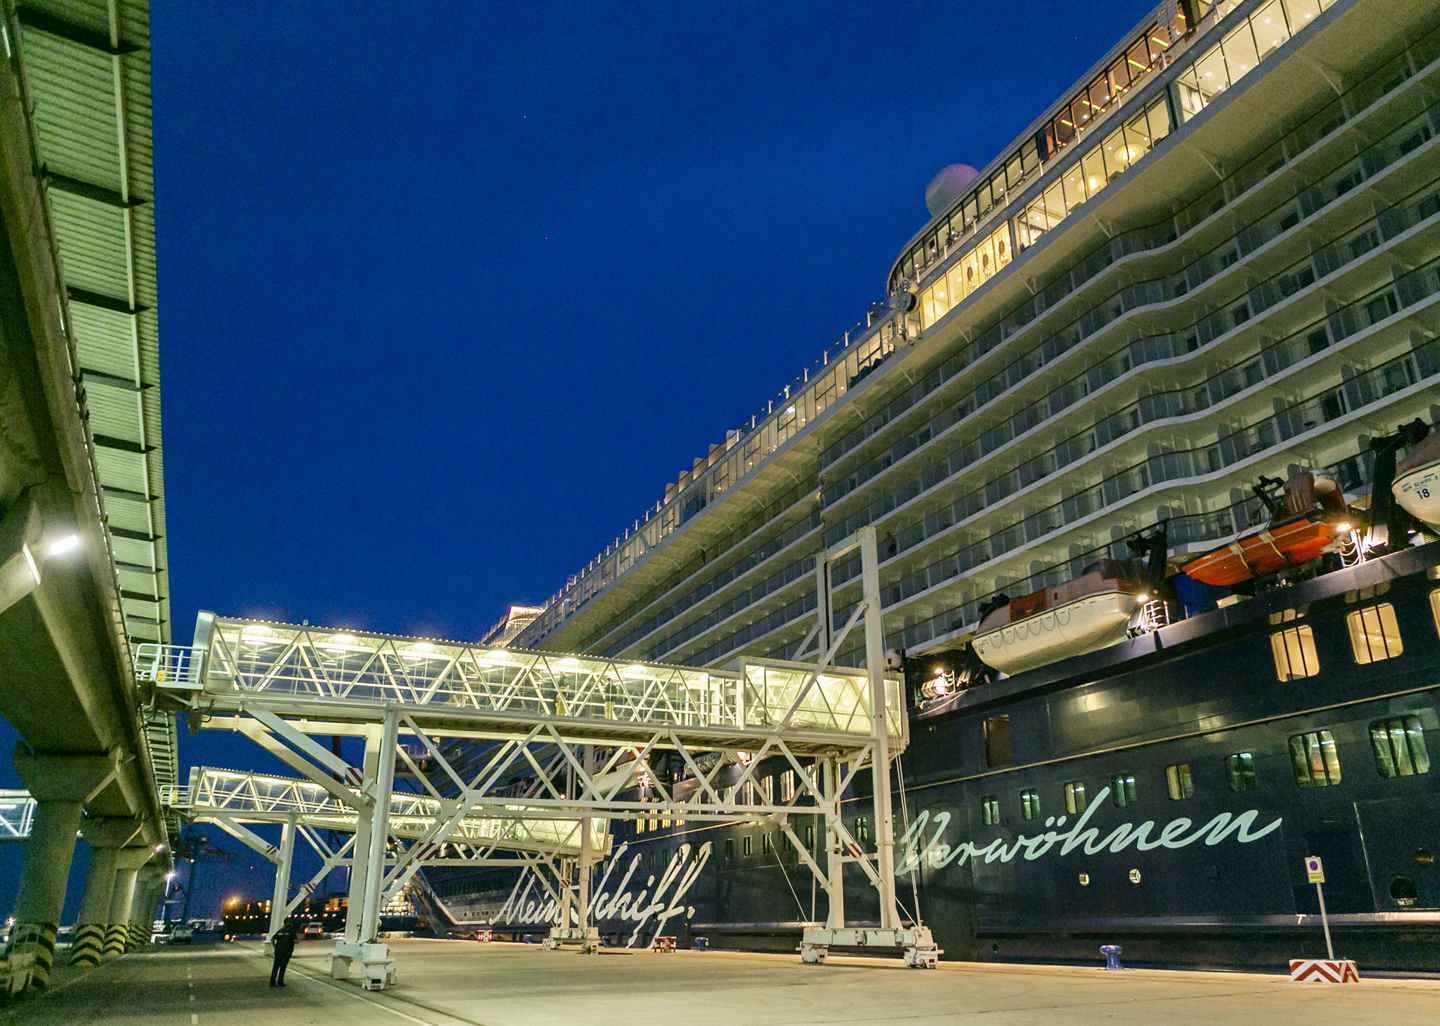 Malaga Cruise Port will receive 41 cruise calls during the Summer Season